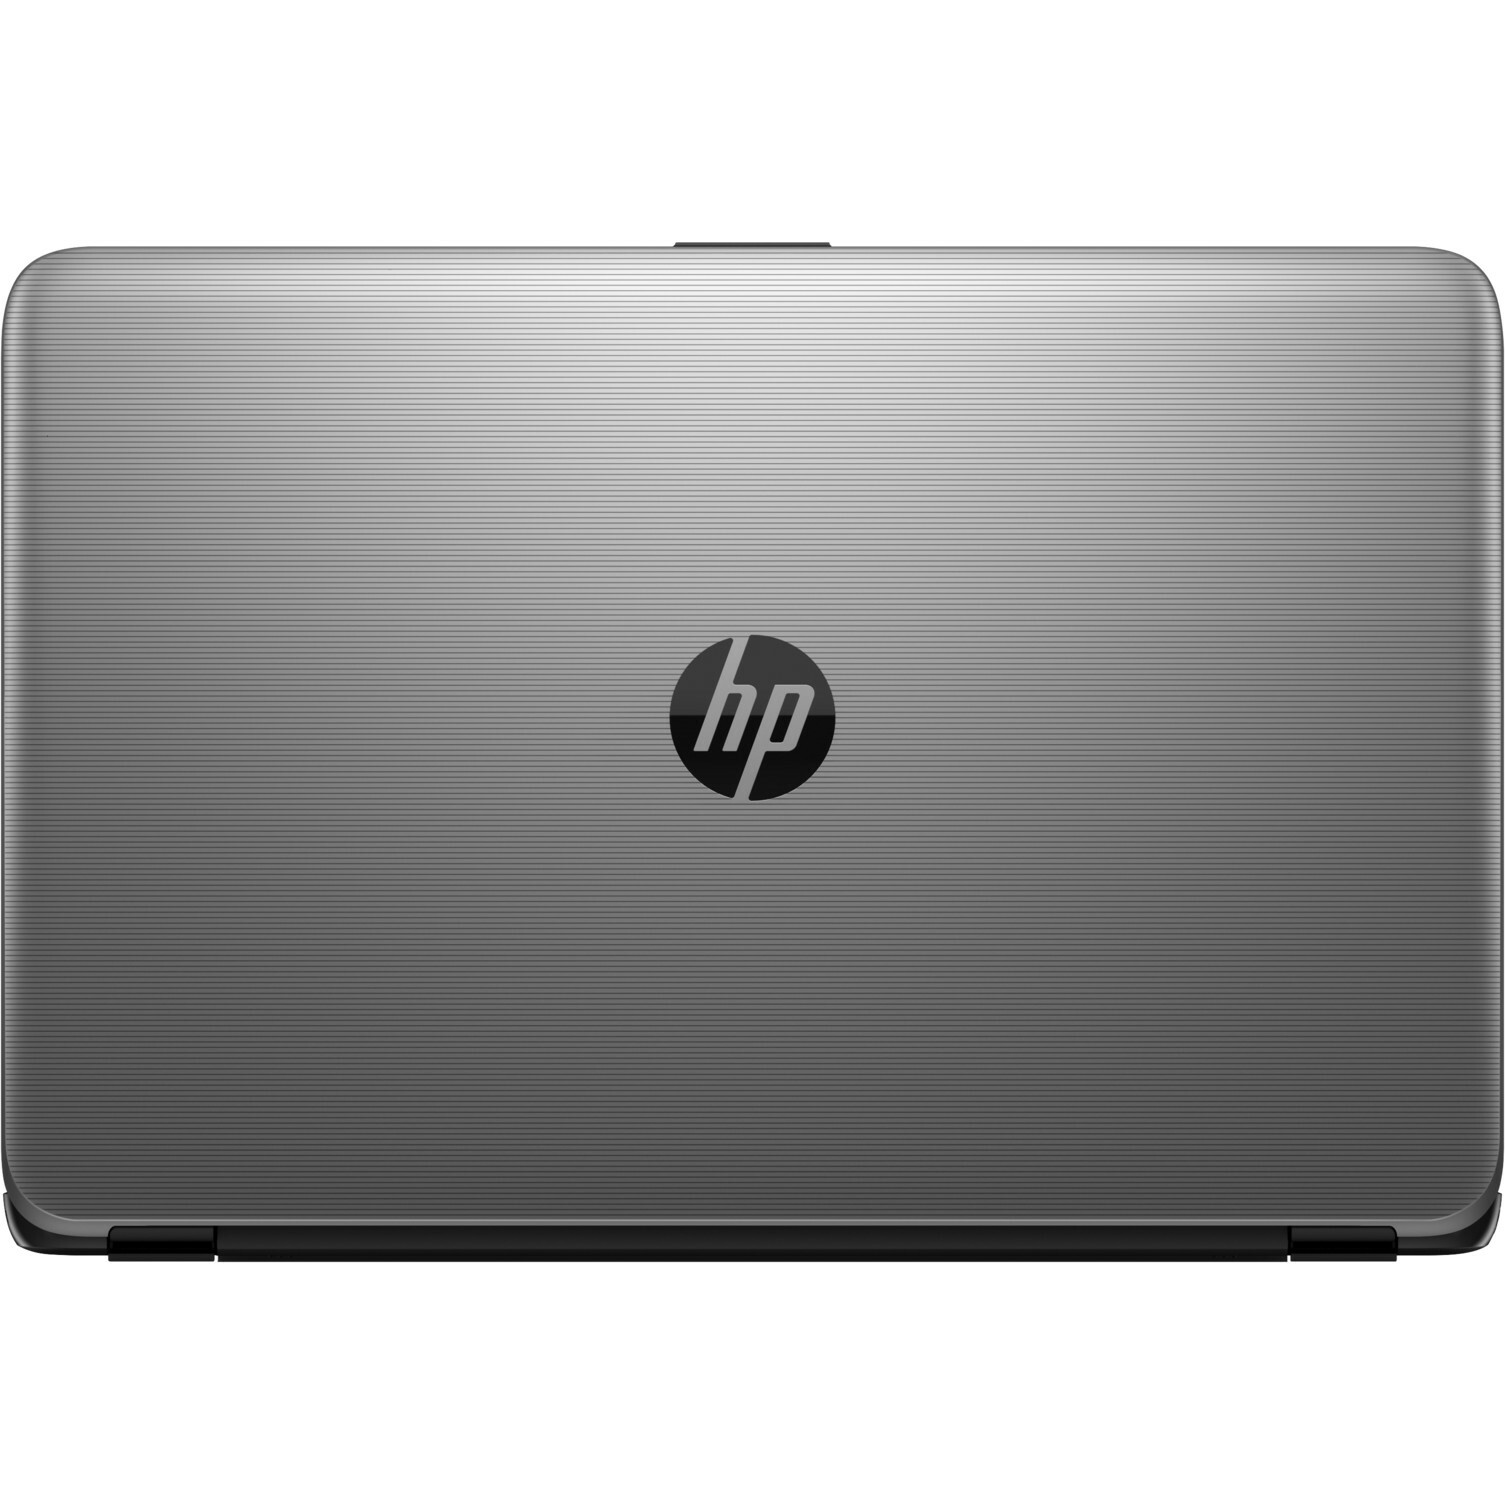 HP 15-ay039wm 15.6" Silver Fusion Laptop, Windows 10, Intel Core i3-6100U Processor, 8GB Memory, 1TB Hard Drive - image 5 of 5